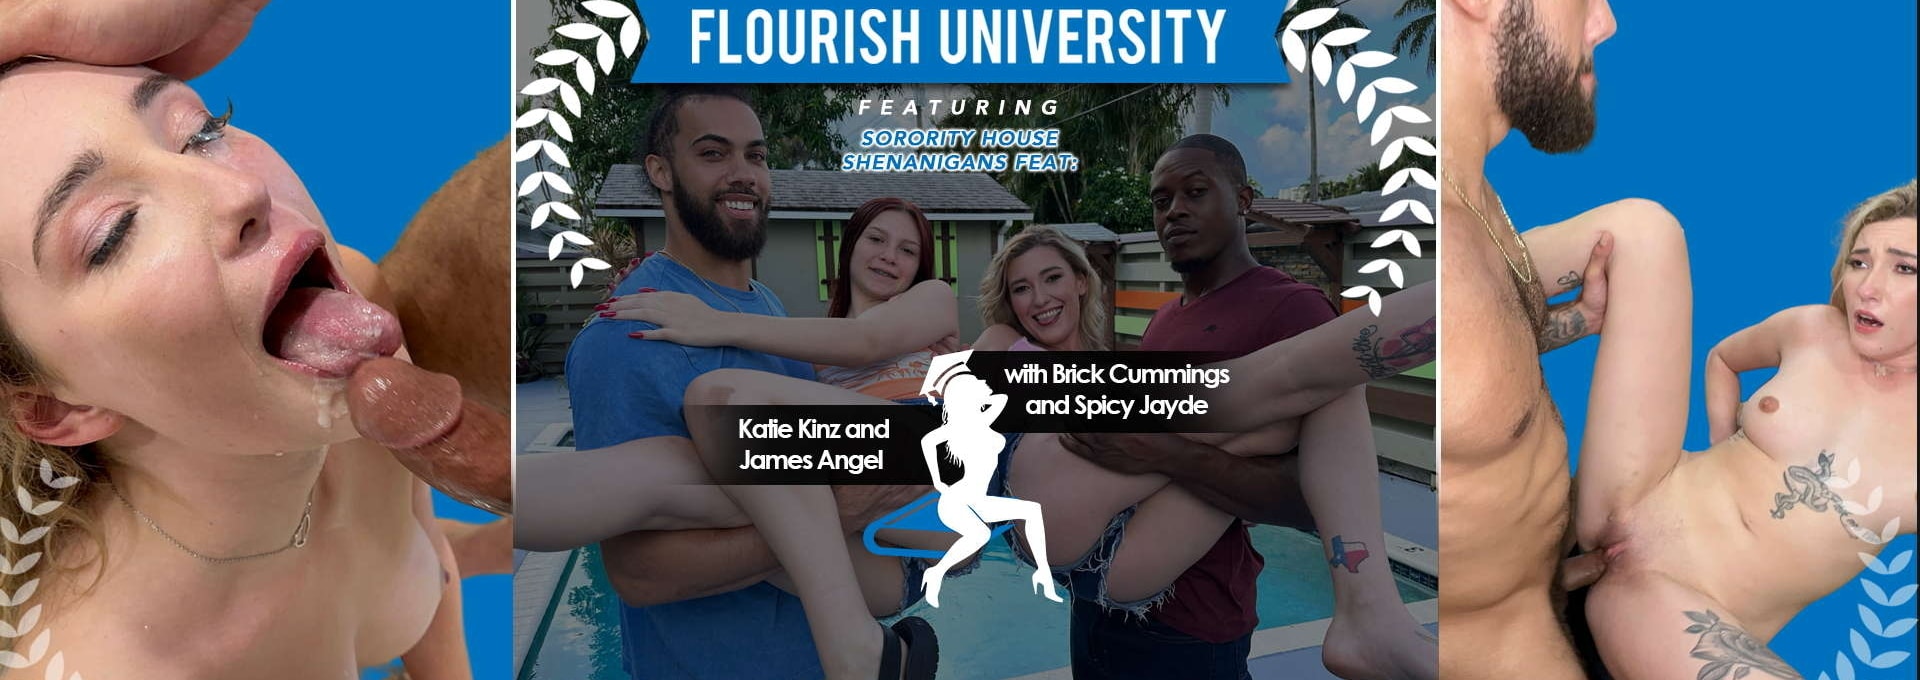 Flourish University Ep 12 Katie Kinz and James Angel